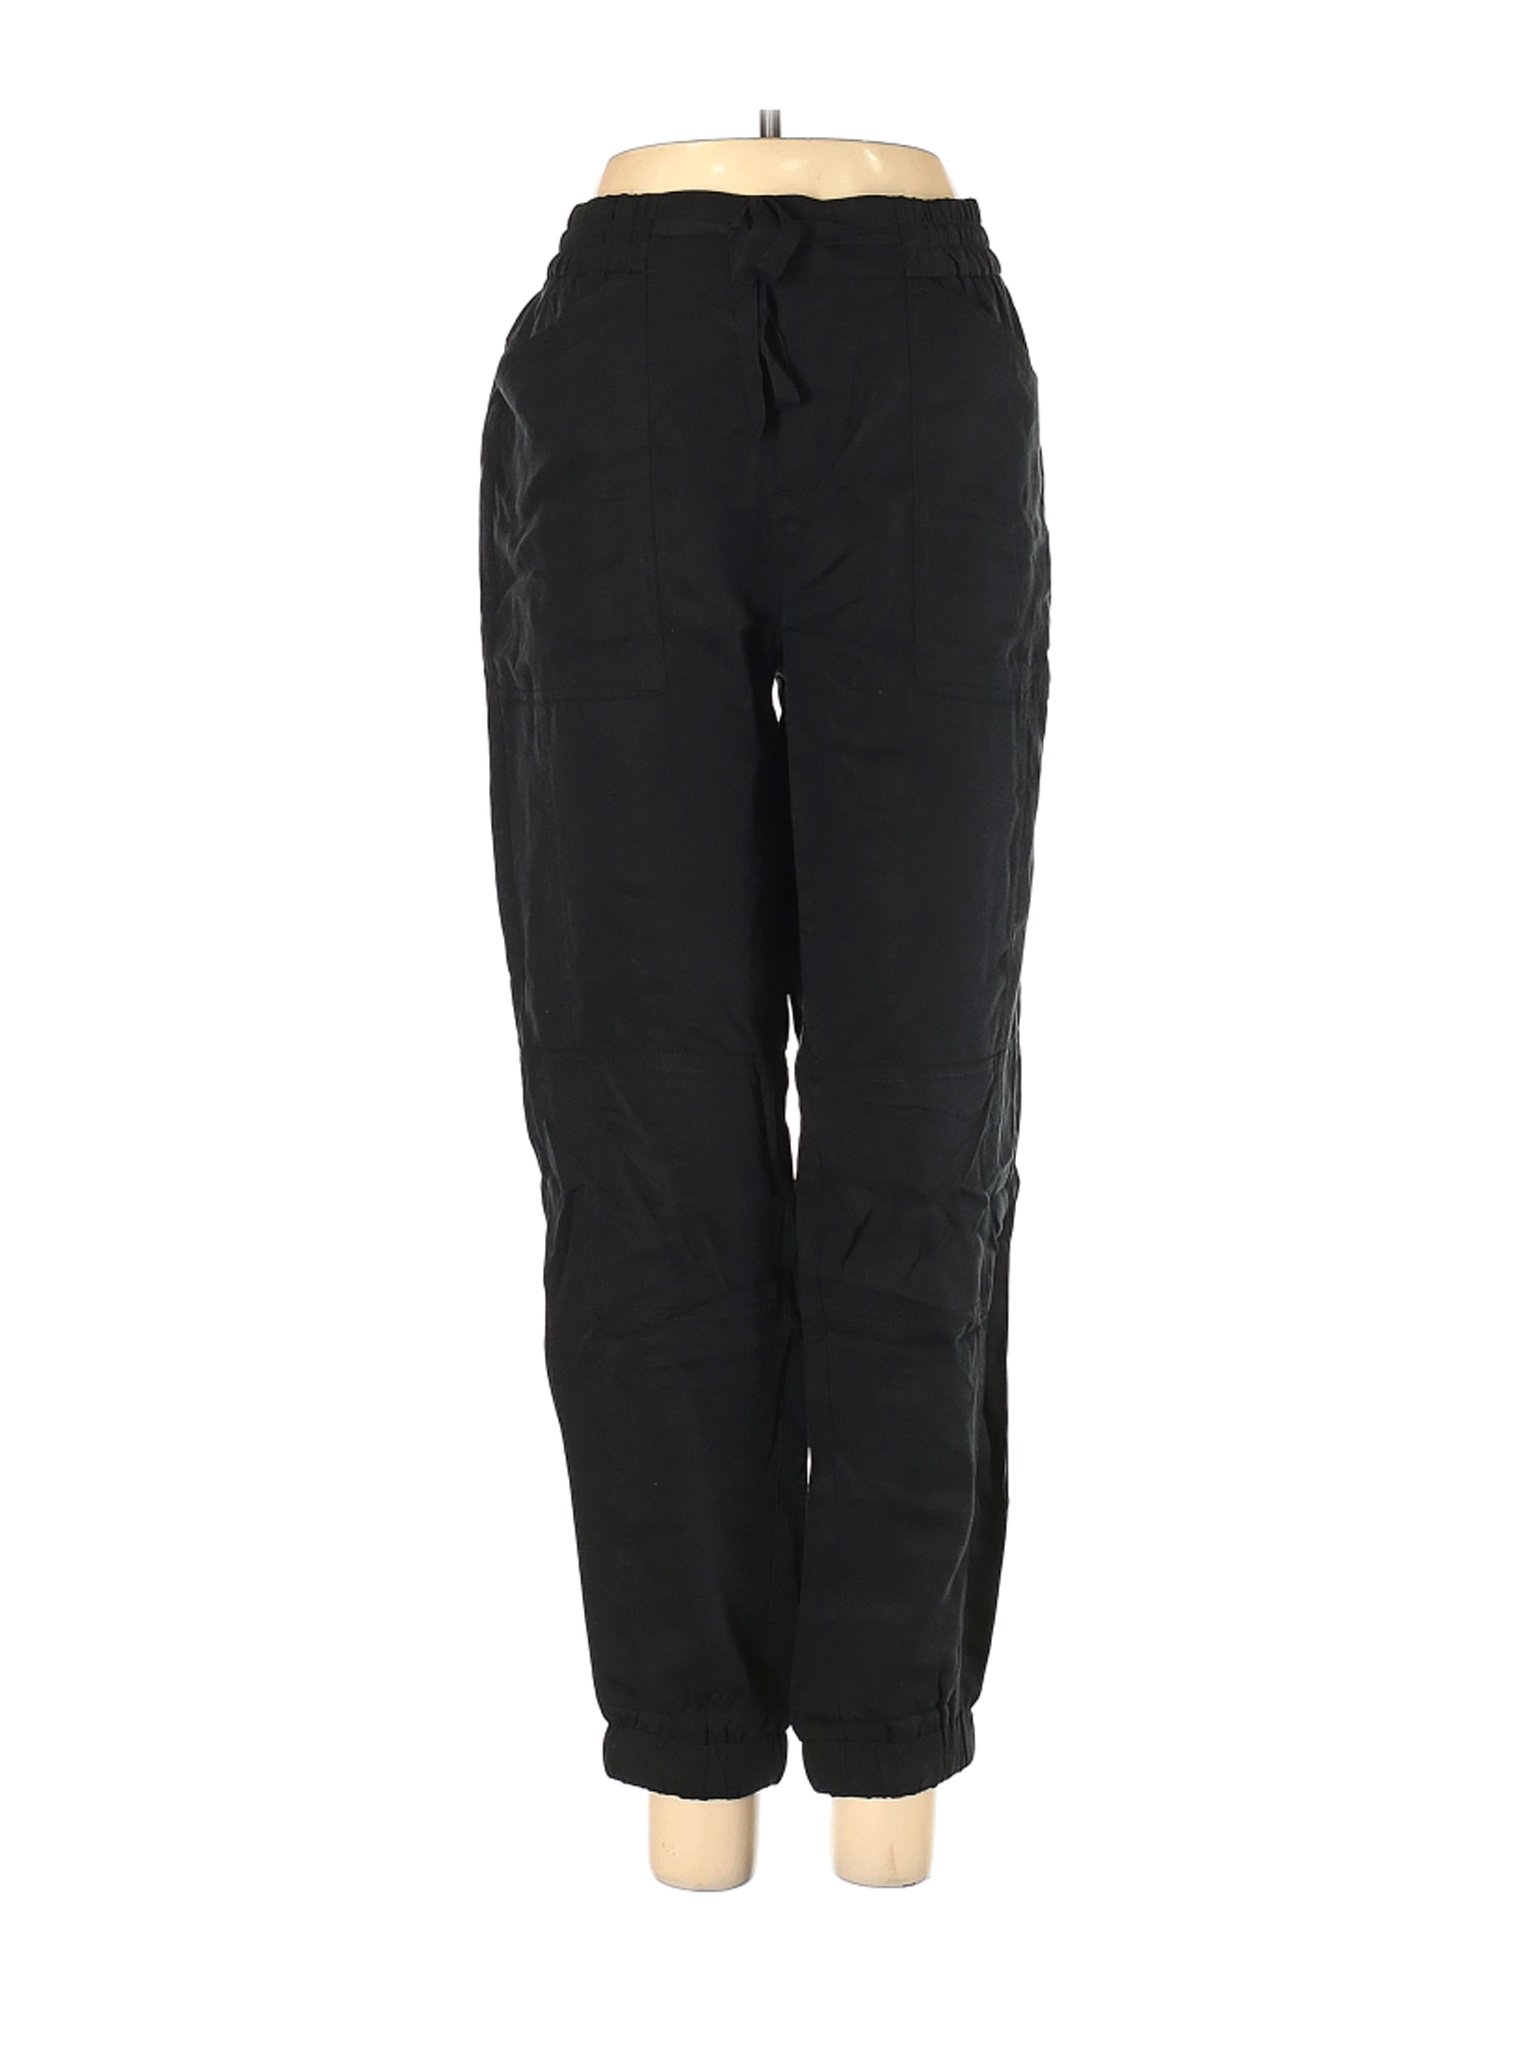 Banana Republic Women Black Casual Pants S | eBay